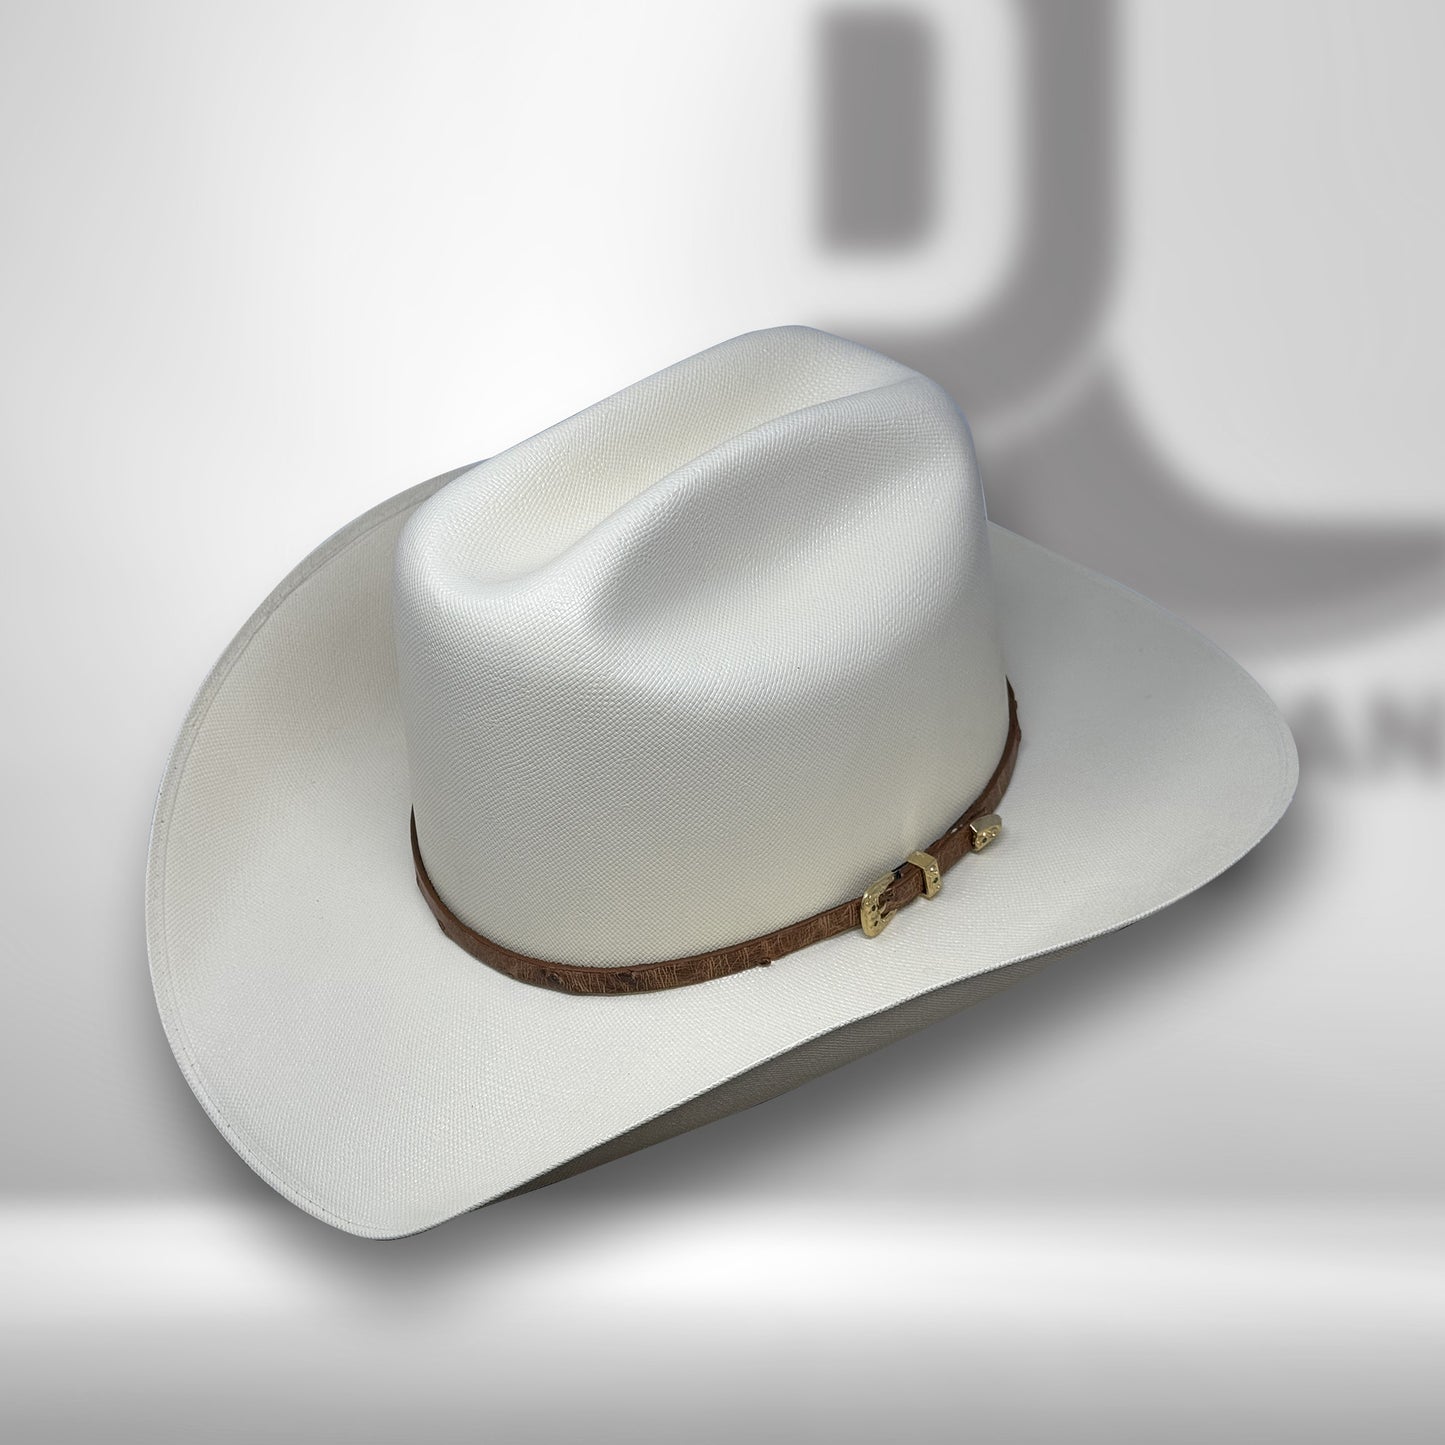 Don Juan Hats "El Rey Julion" 1000x Curved